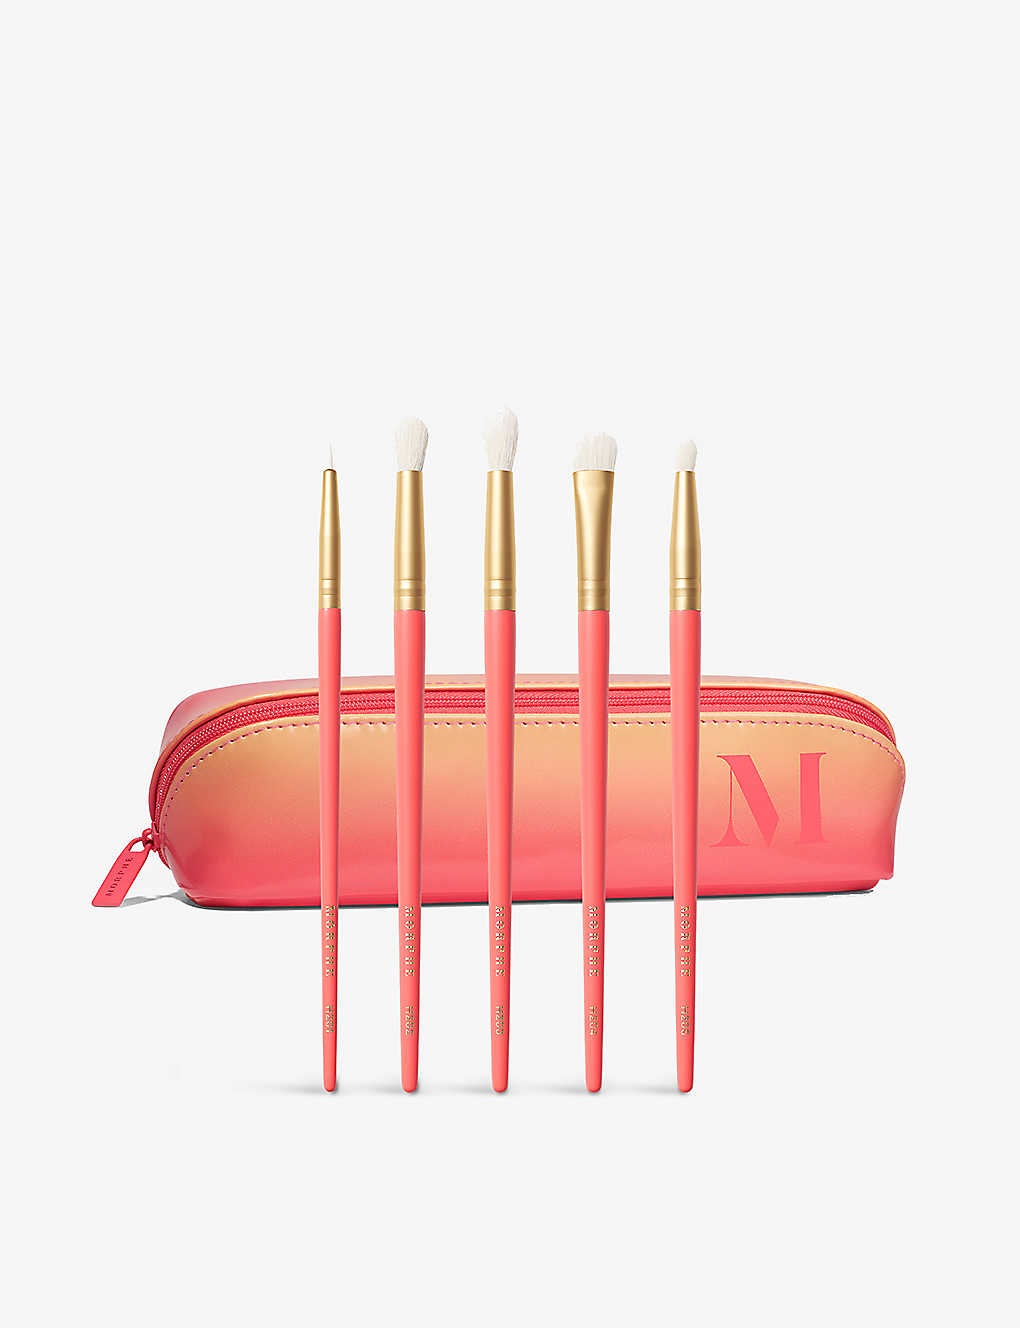 Morphe Heatseeker Limited-edition Five-piece Brush Set